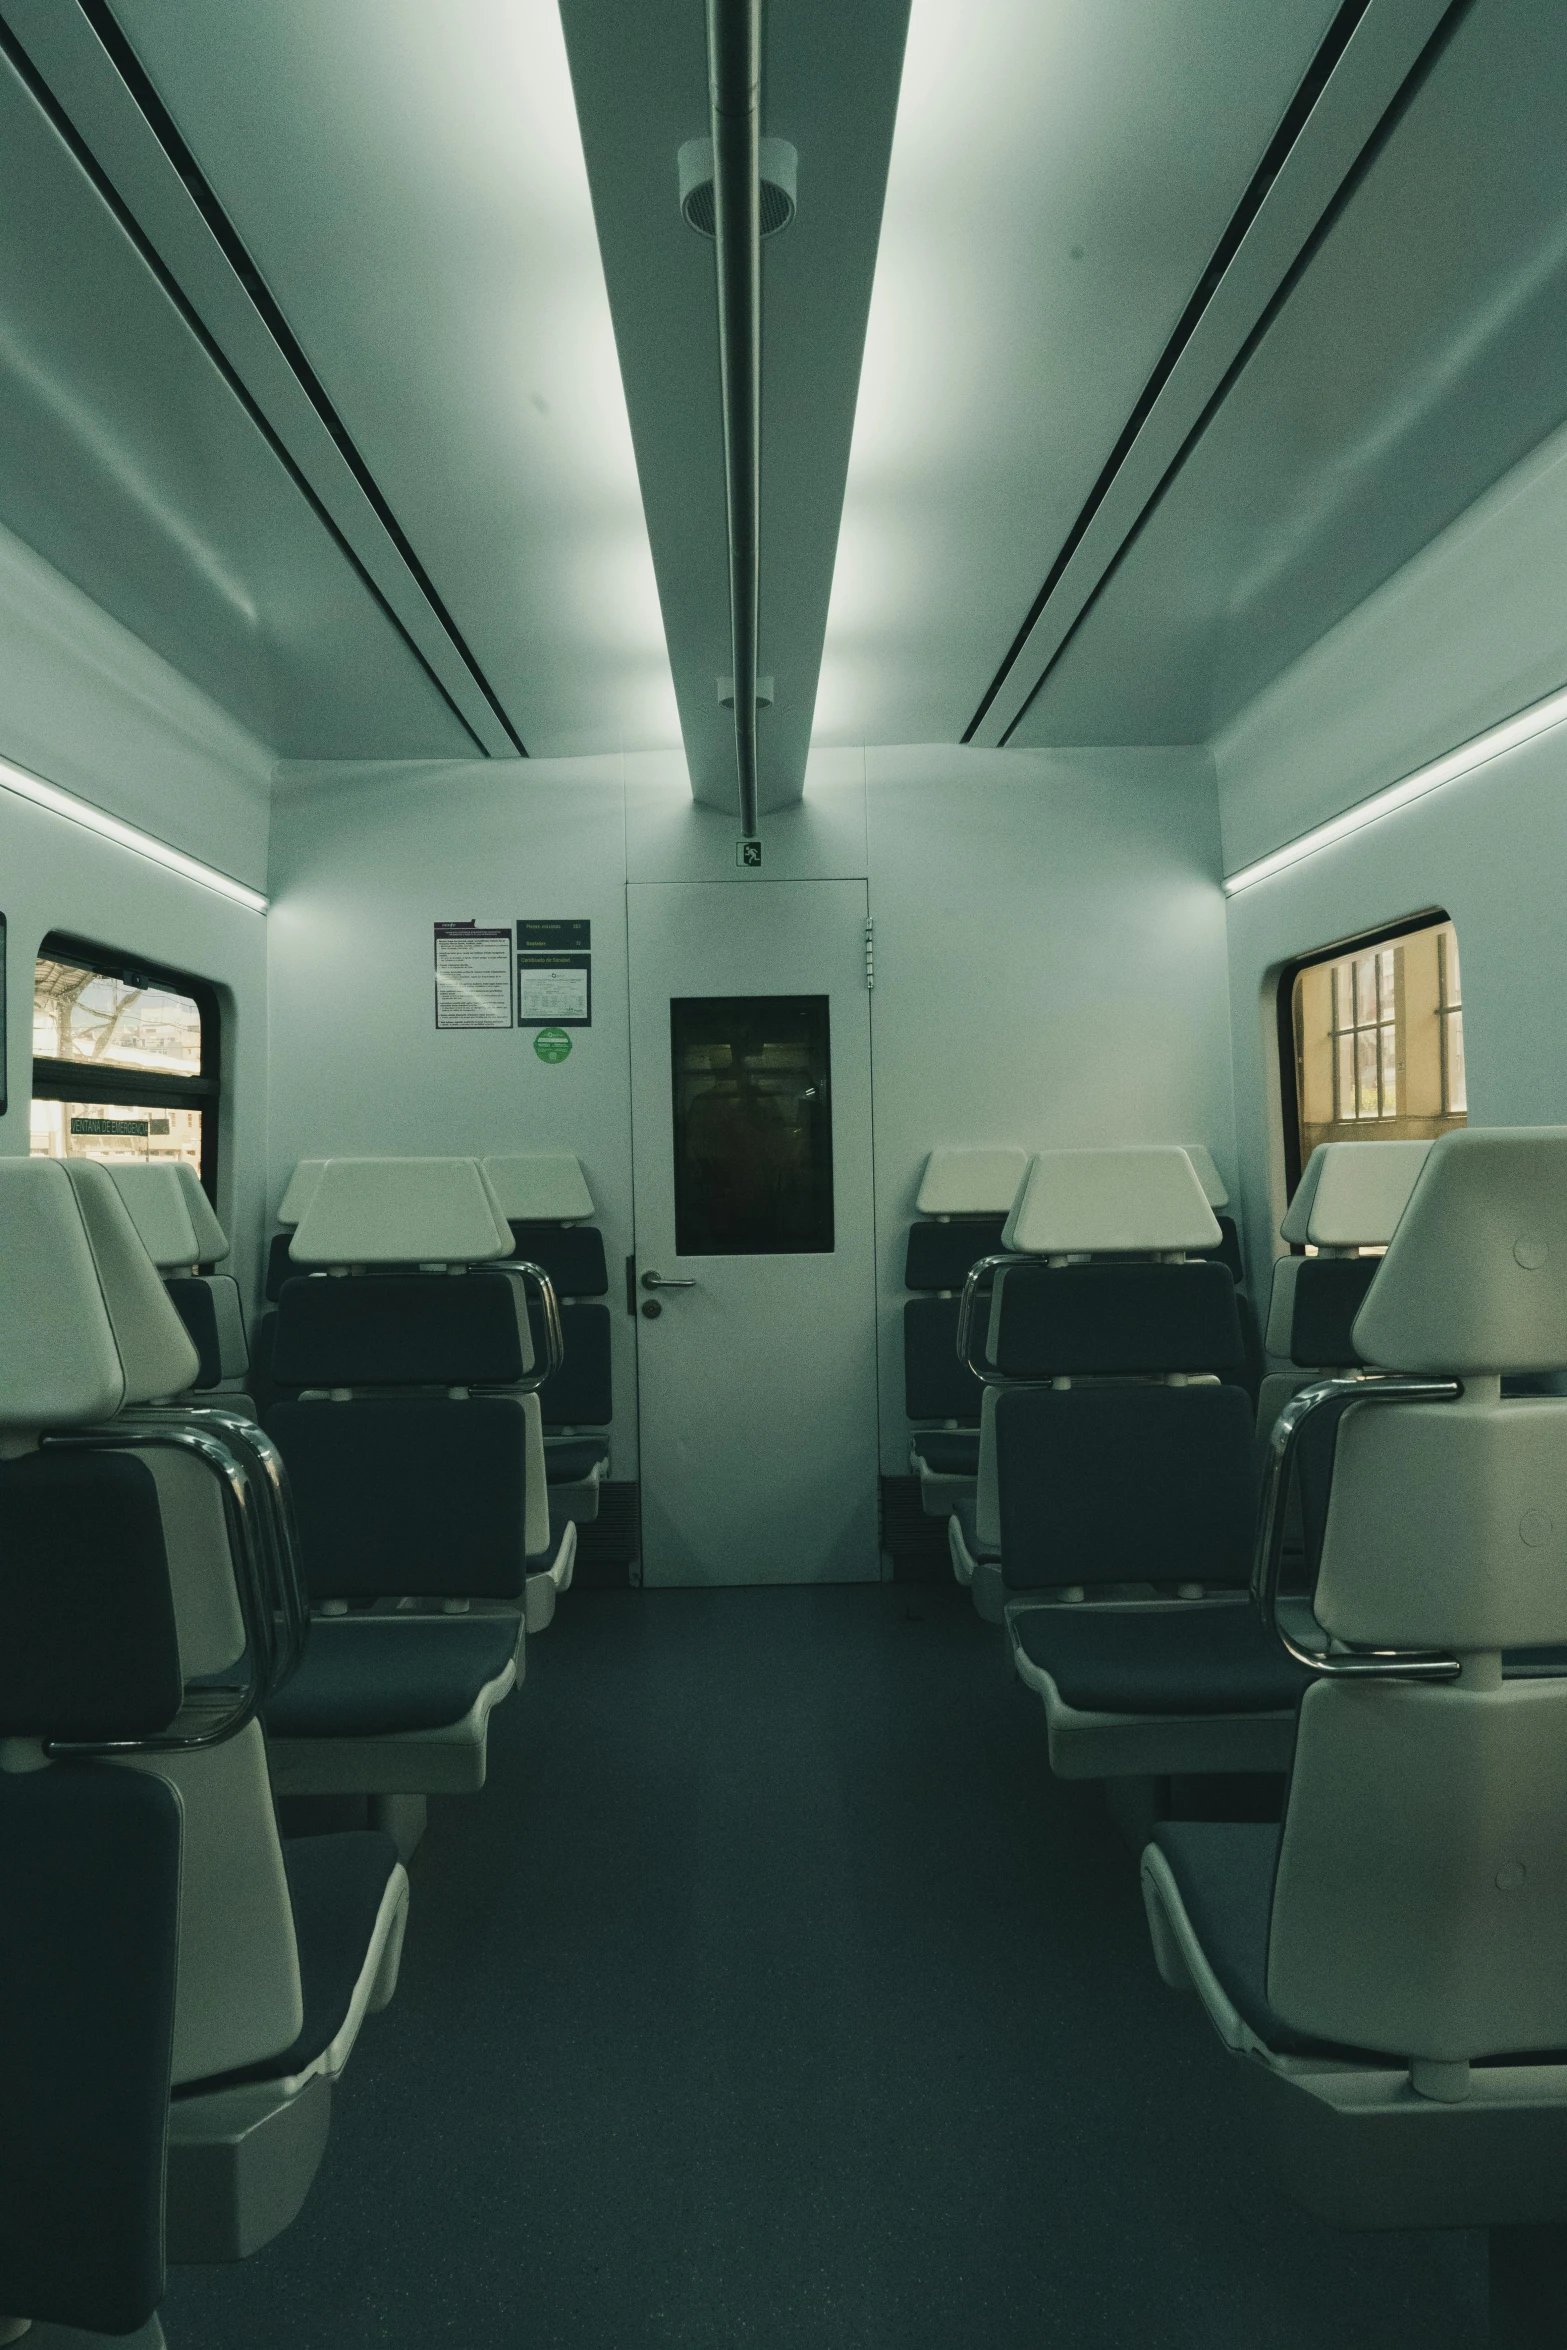 empty passenger train car with three windows and lights